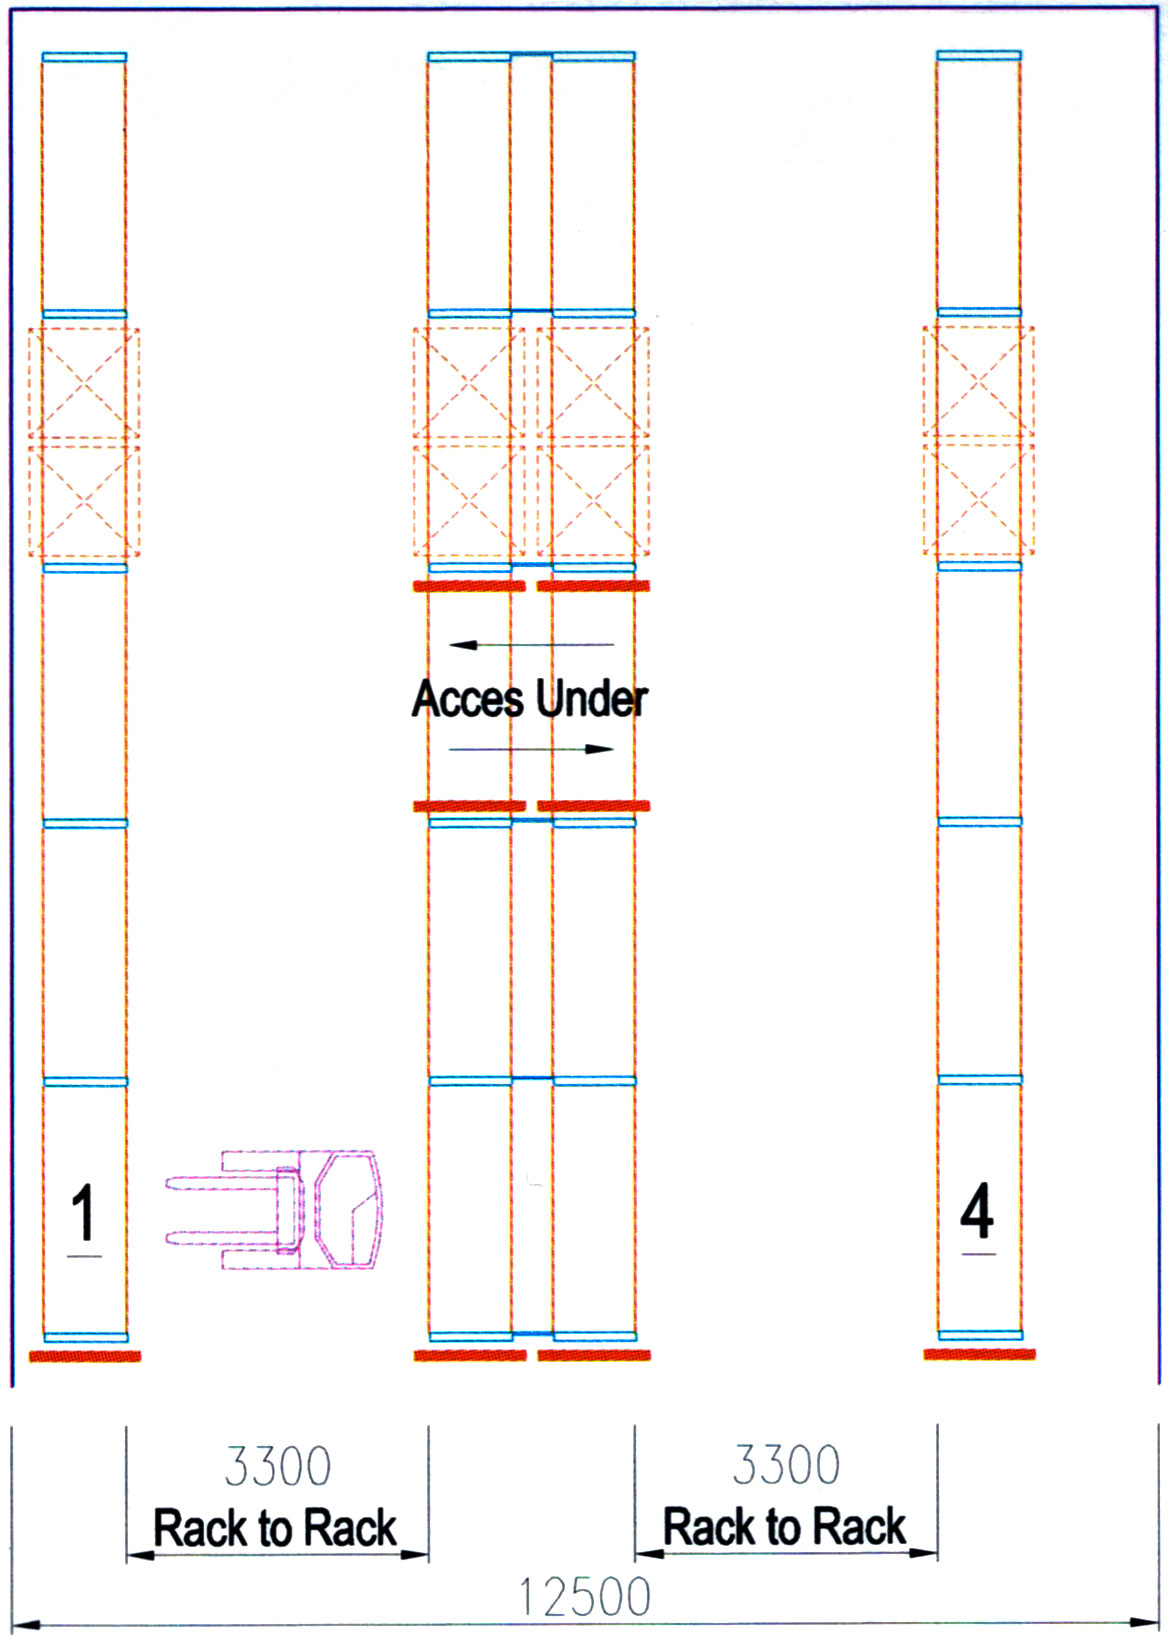 Aisle width for reach truck